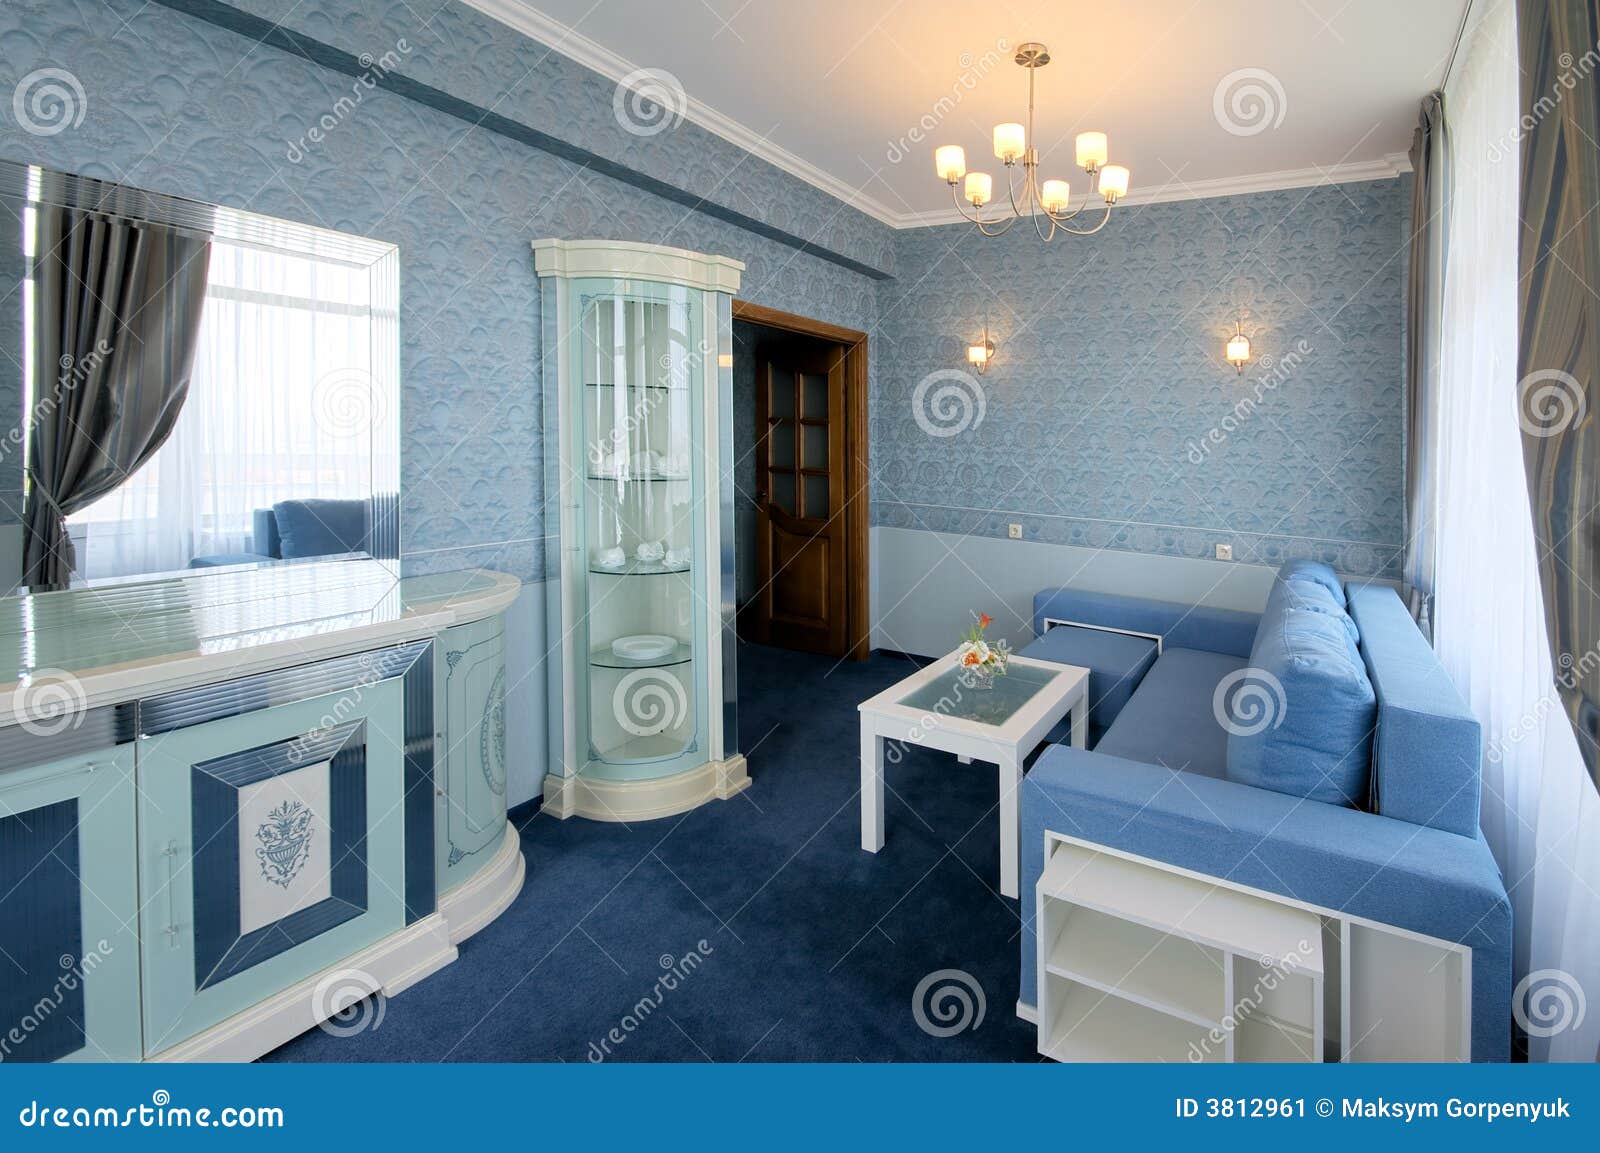 blue living room interior